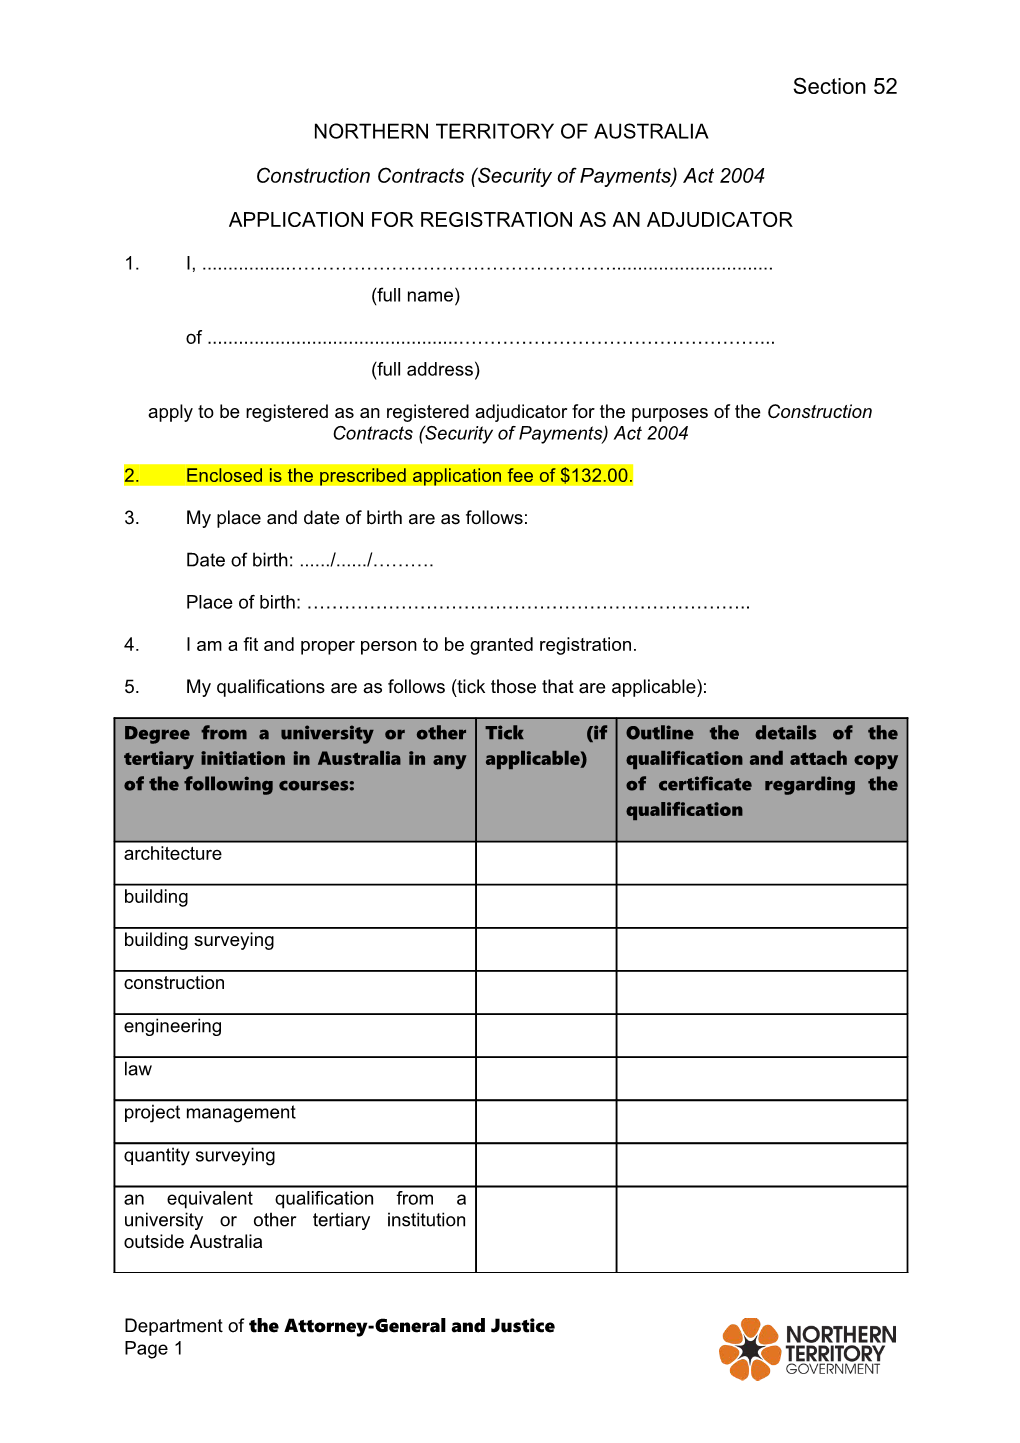 Adjudicator Registration Form